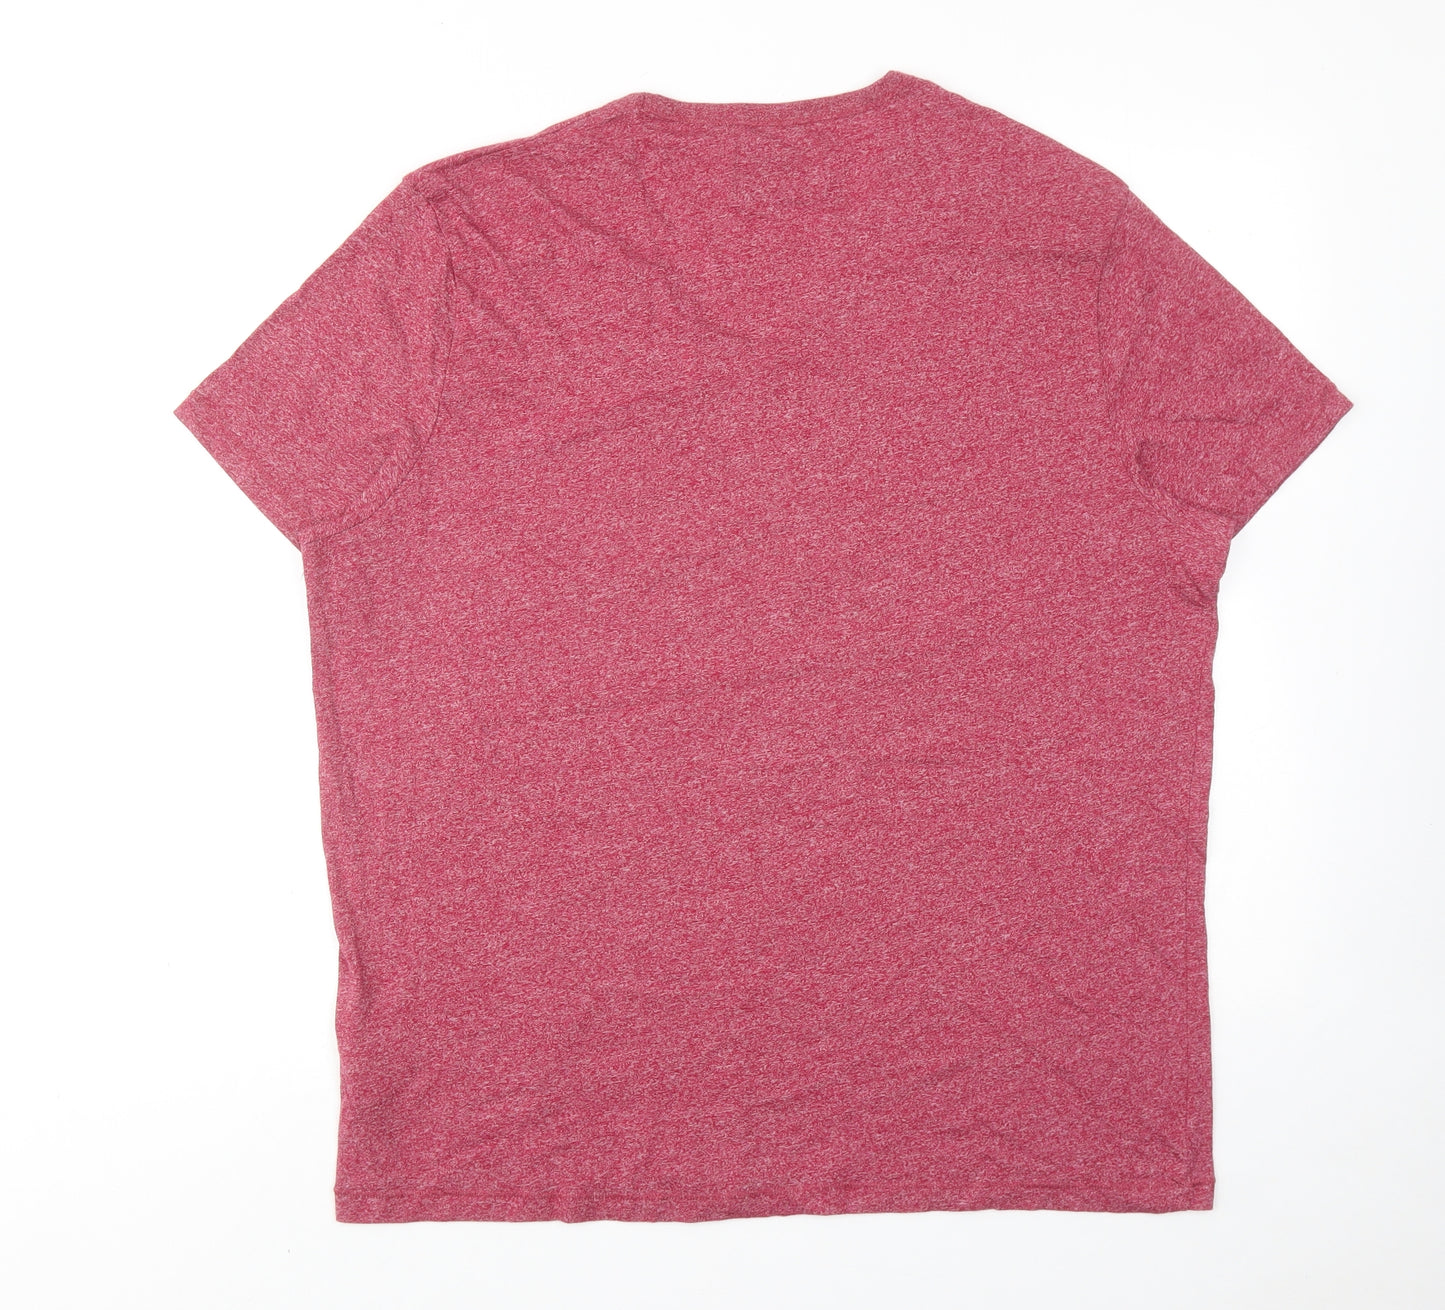 Burton Mens Pink Cotton T-Shirt Size XL V-Neck